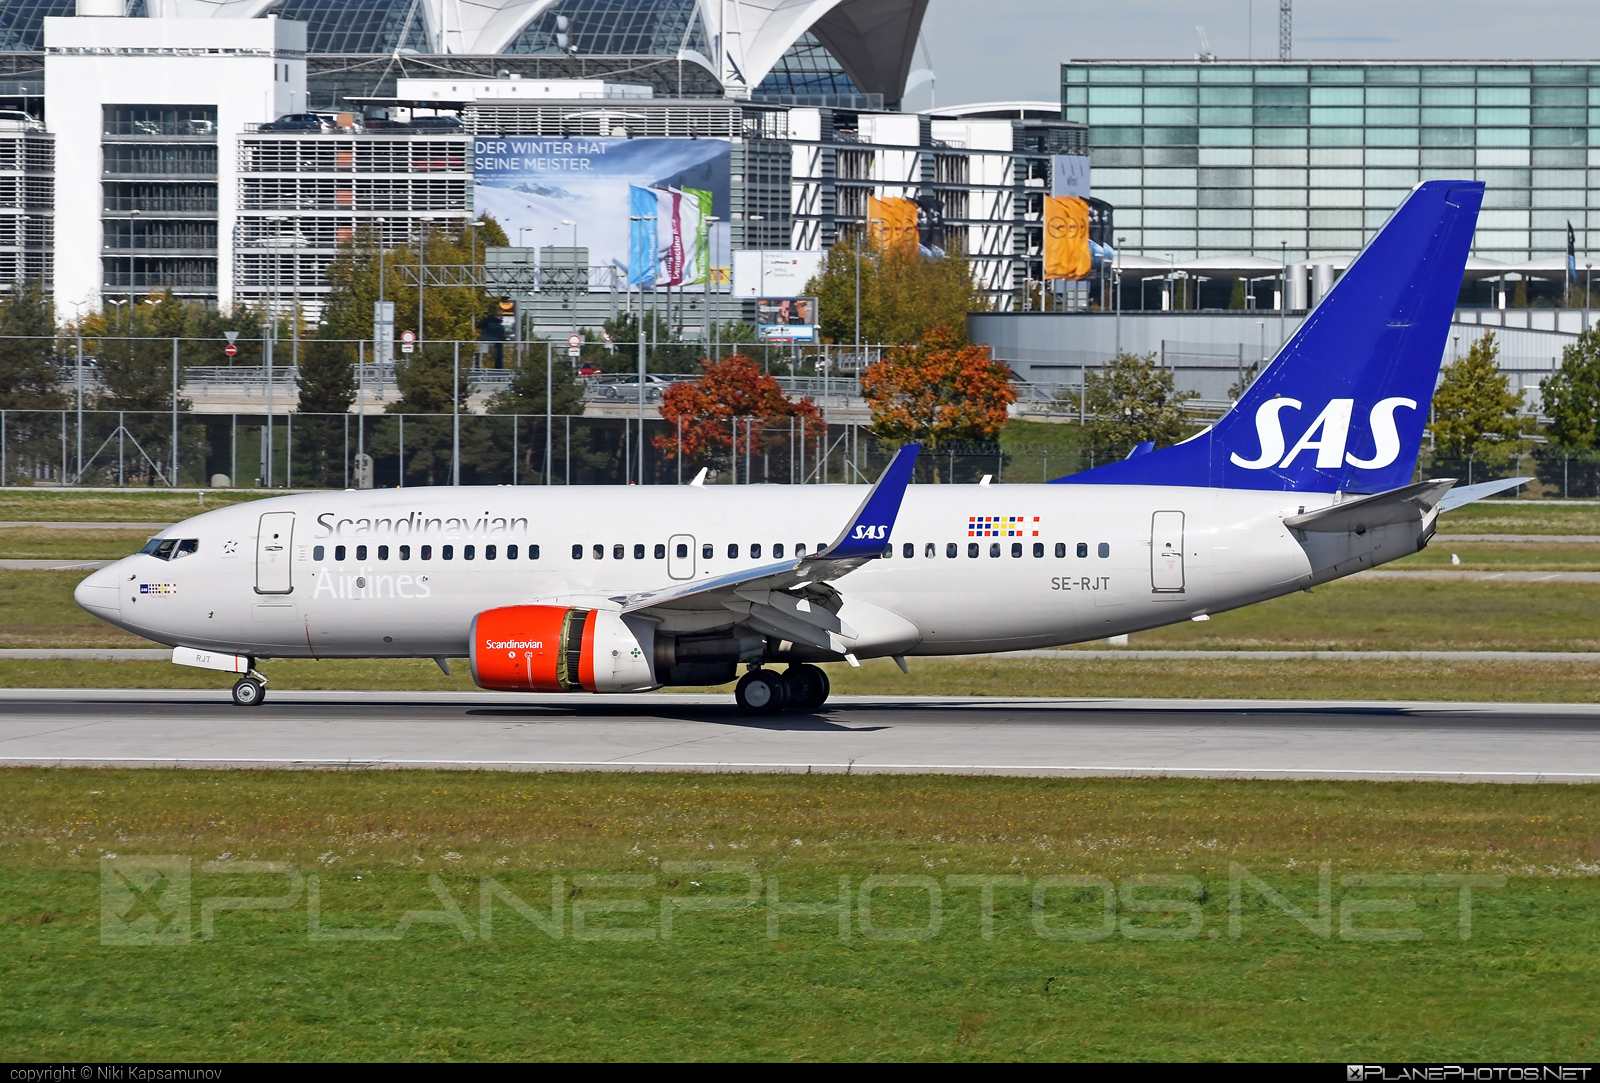 Boeing 737-700 - SE-RJT operated by Scandinavian Airlines (SAS) #b737 #b737nextgen #b737ng #boeing #boeing737 #sas #sasairlines #scandinavianairlines